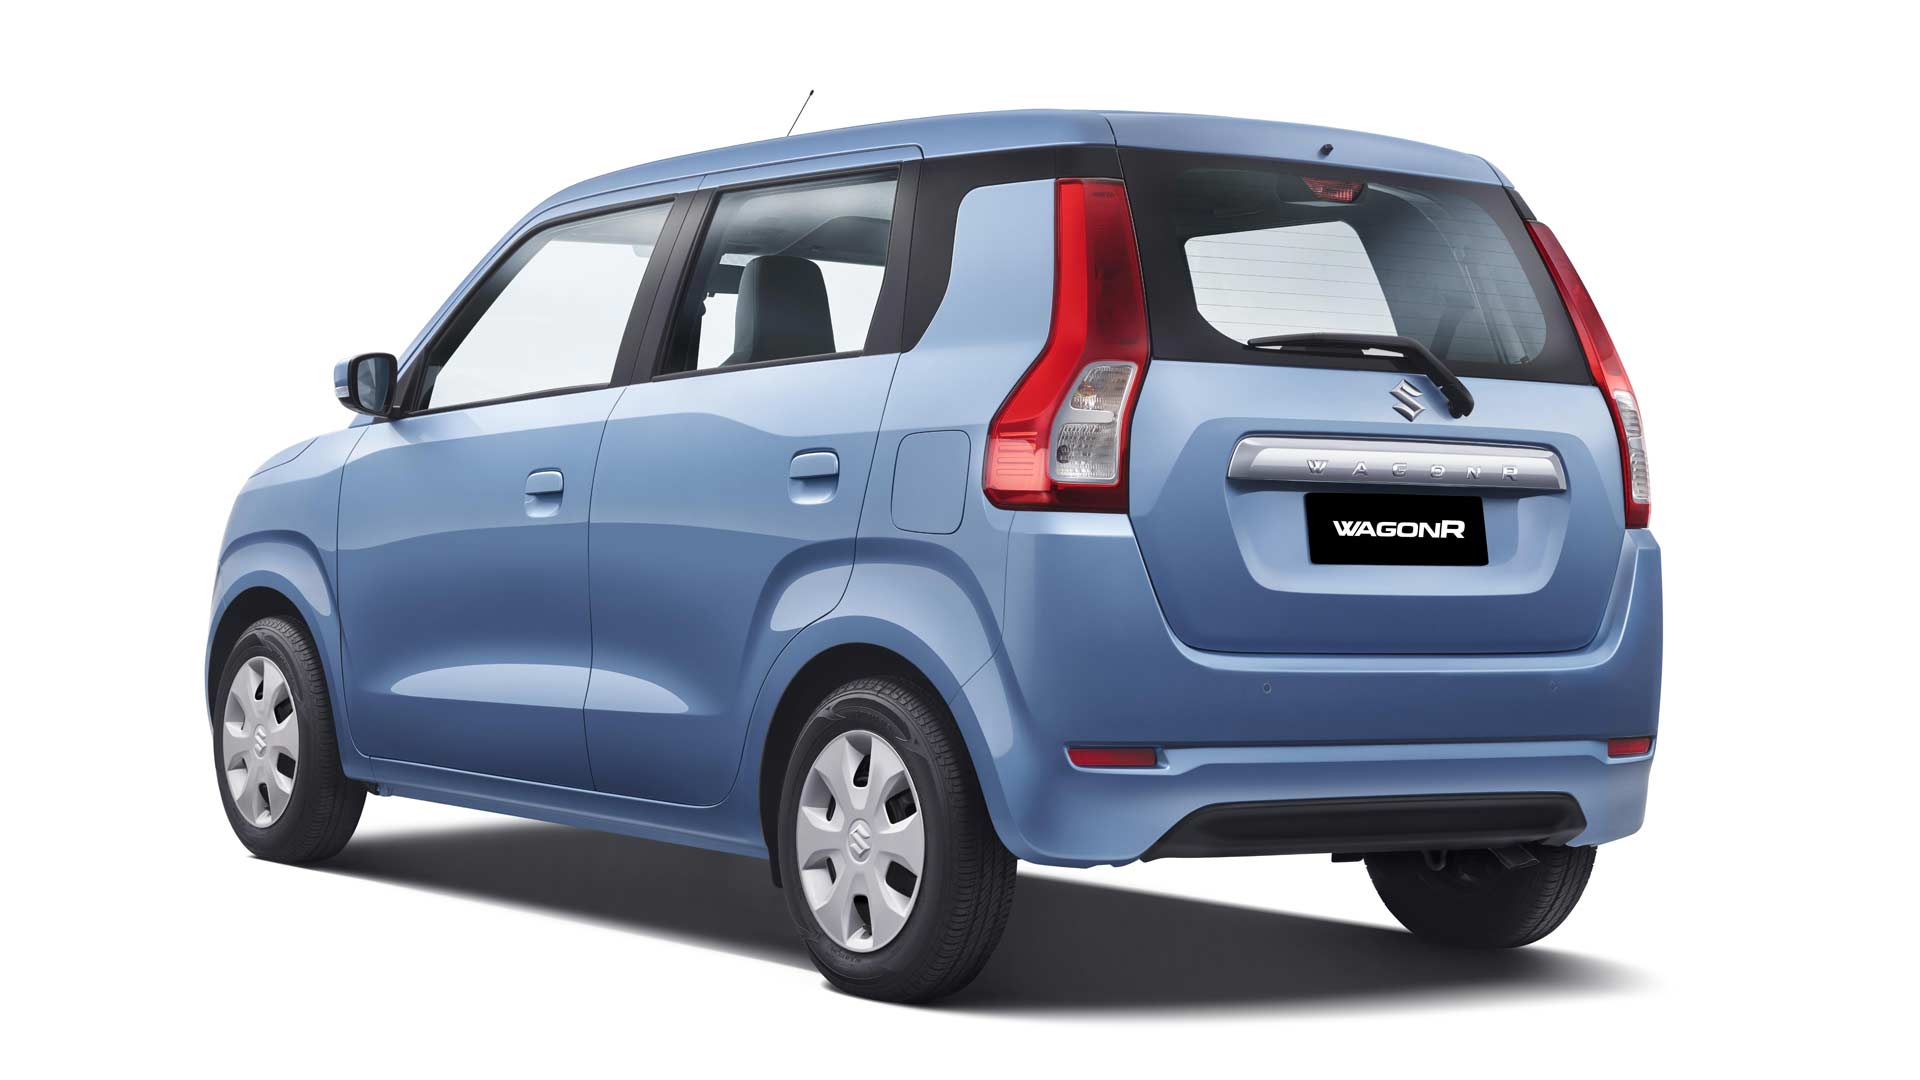 New Maruti Suzuki Wagon R launched at Rs 4.19 lakh - Autodevot